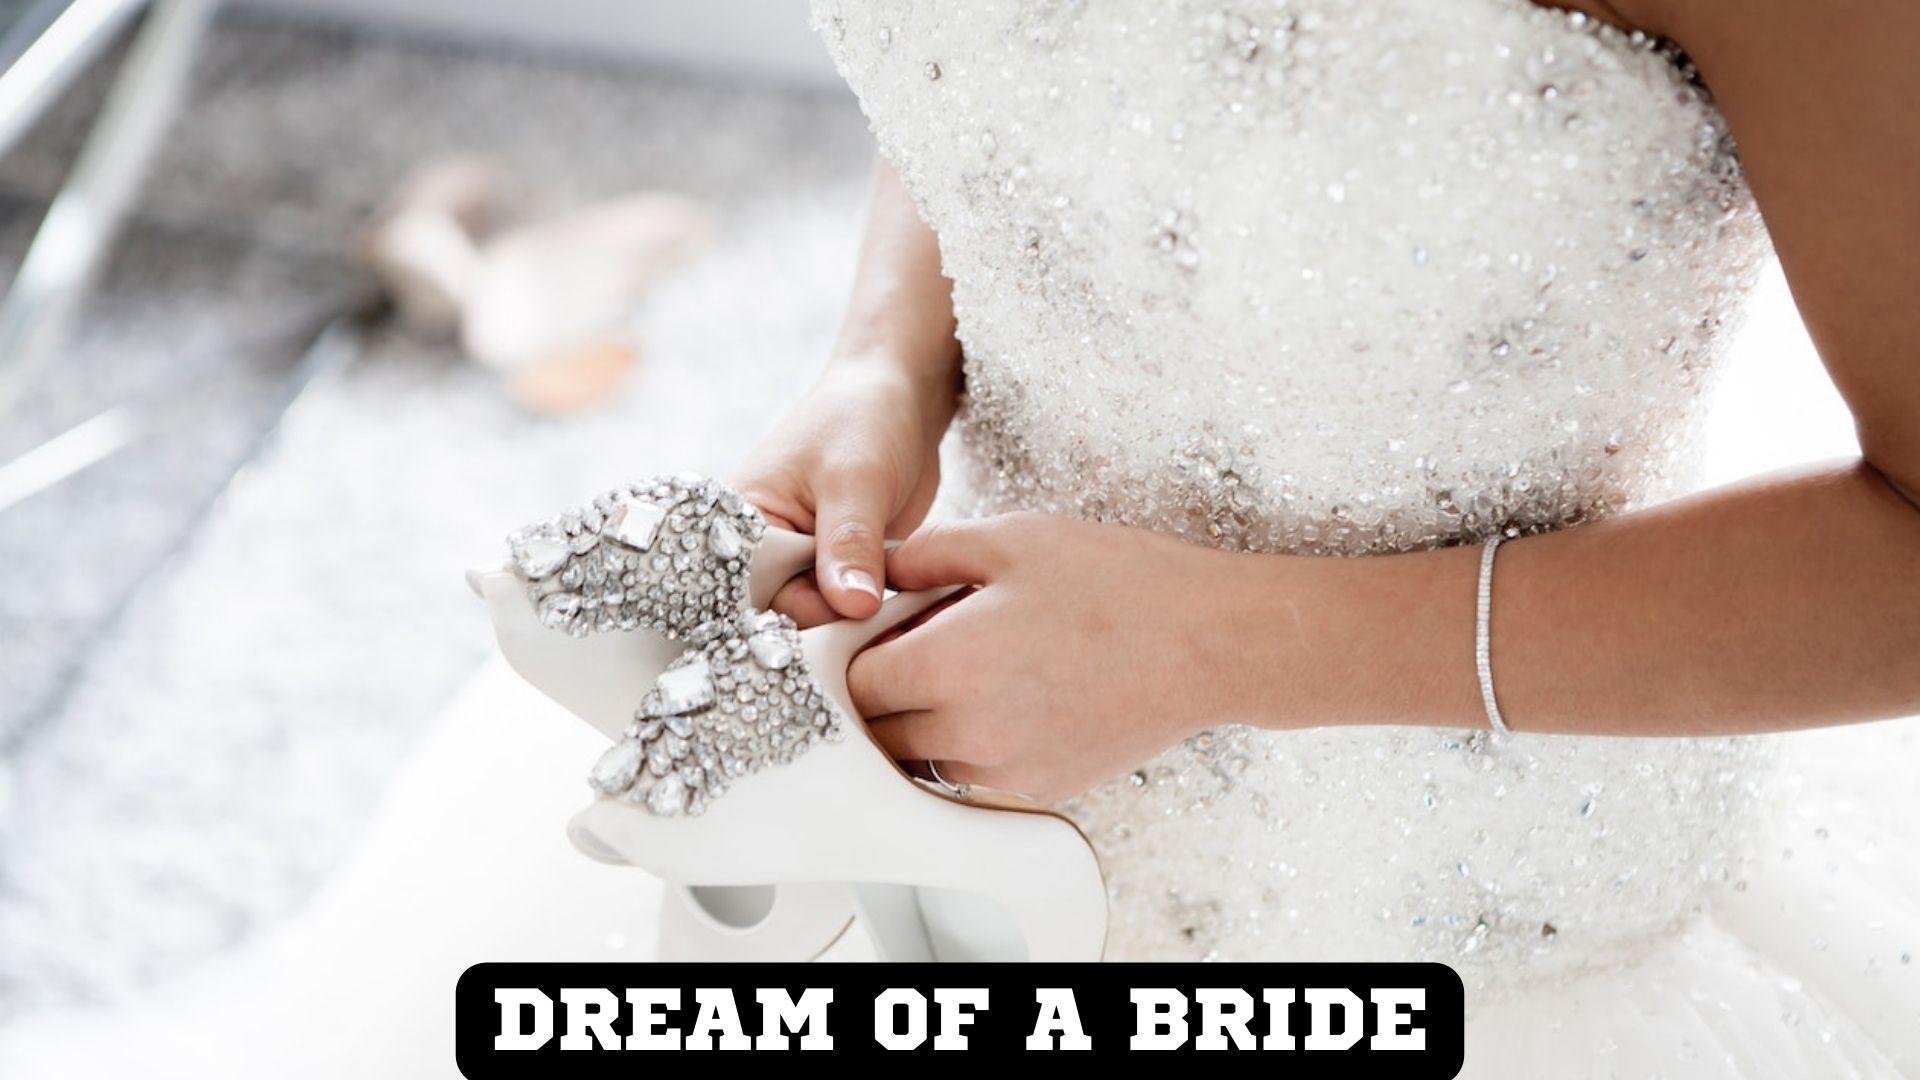 Dream Of A Bride - A Symbol Of Unity And Partnership